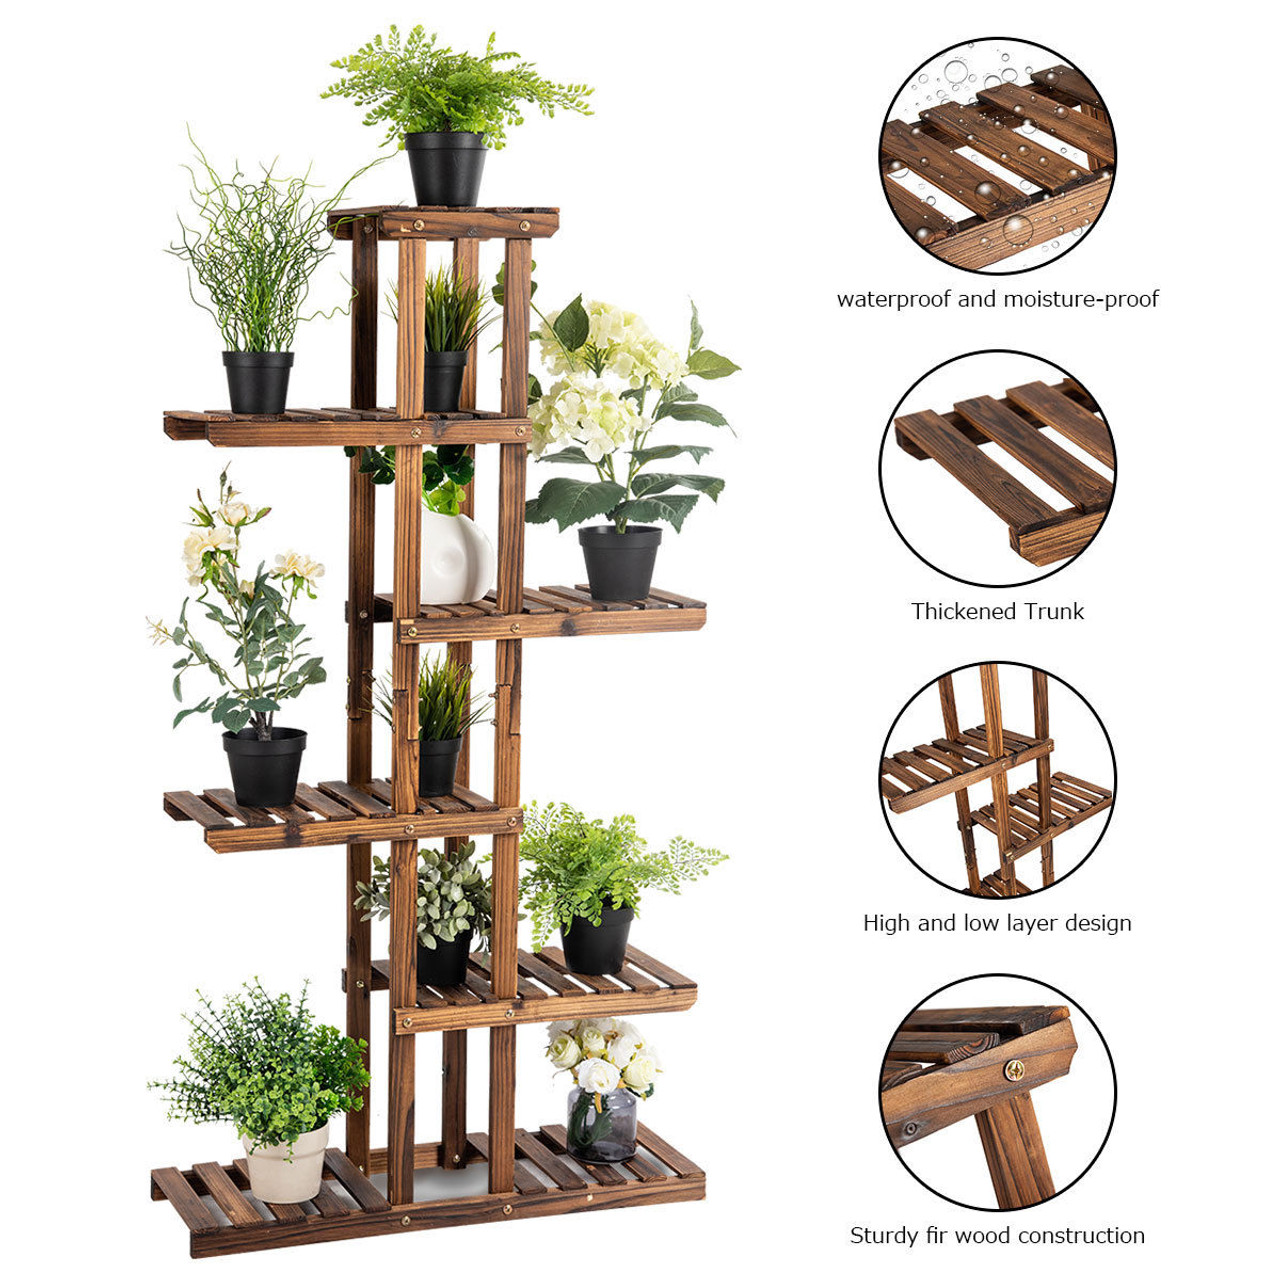 6-Tier Garden Wooden Shelf Storage Plant Rack Stand product image